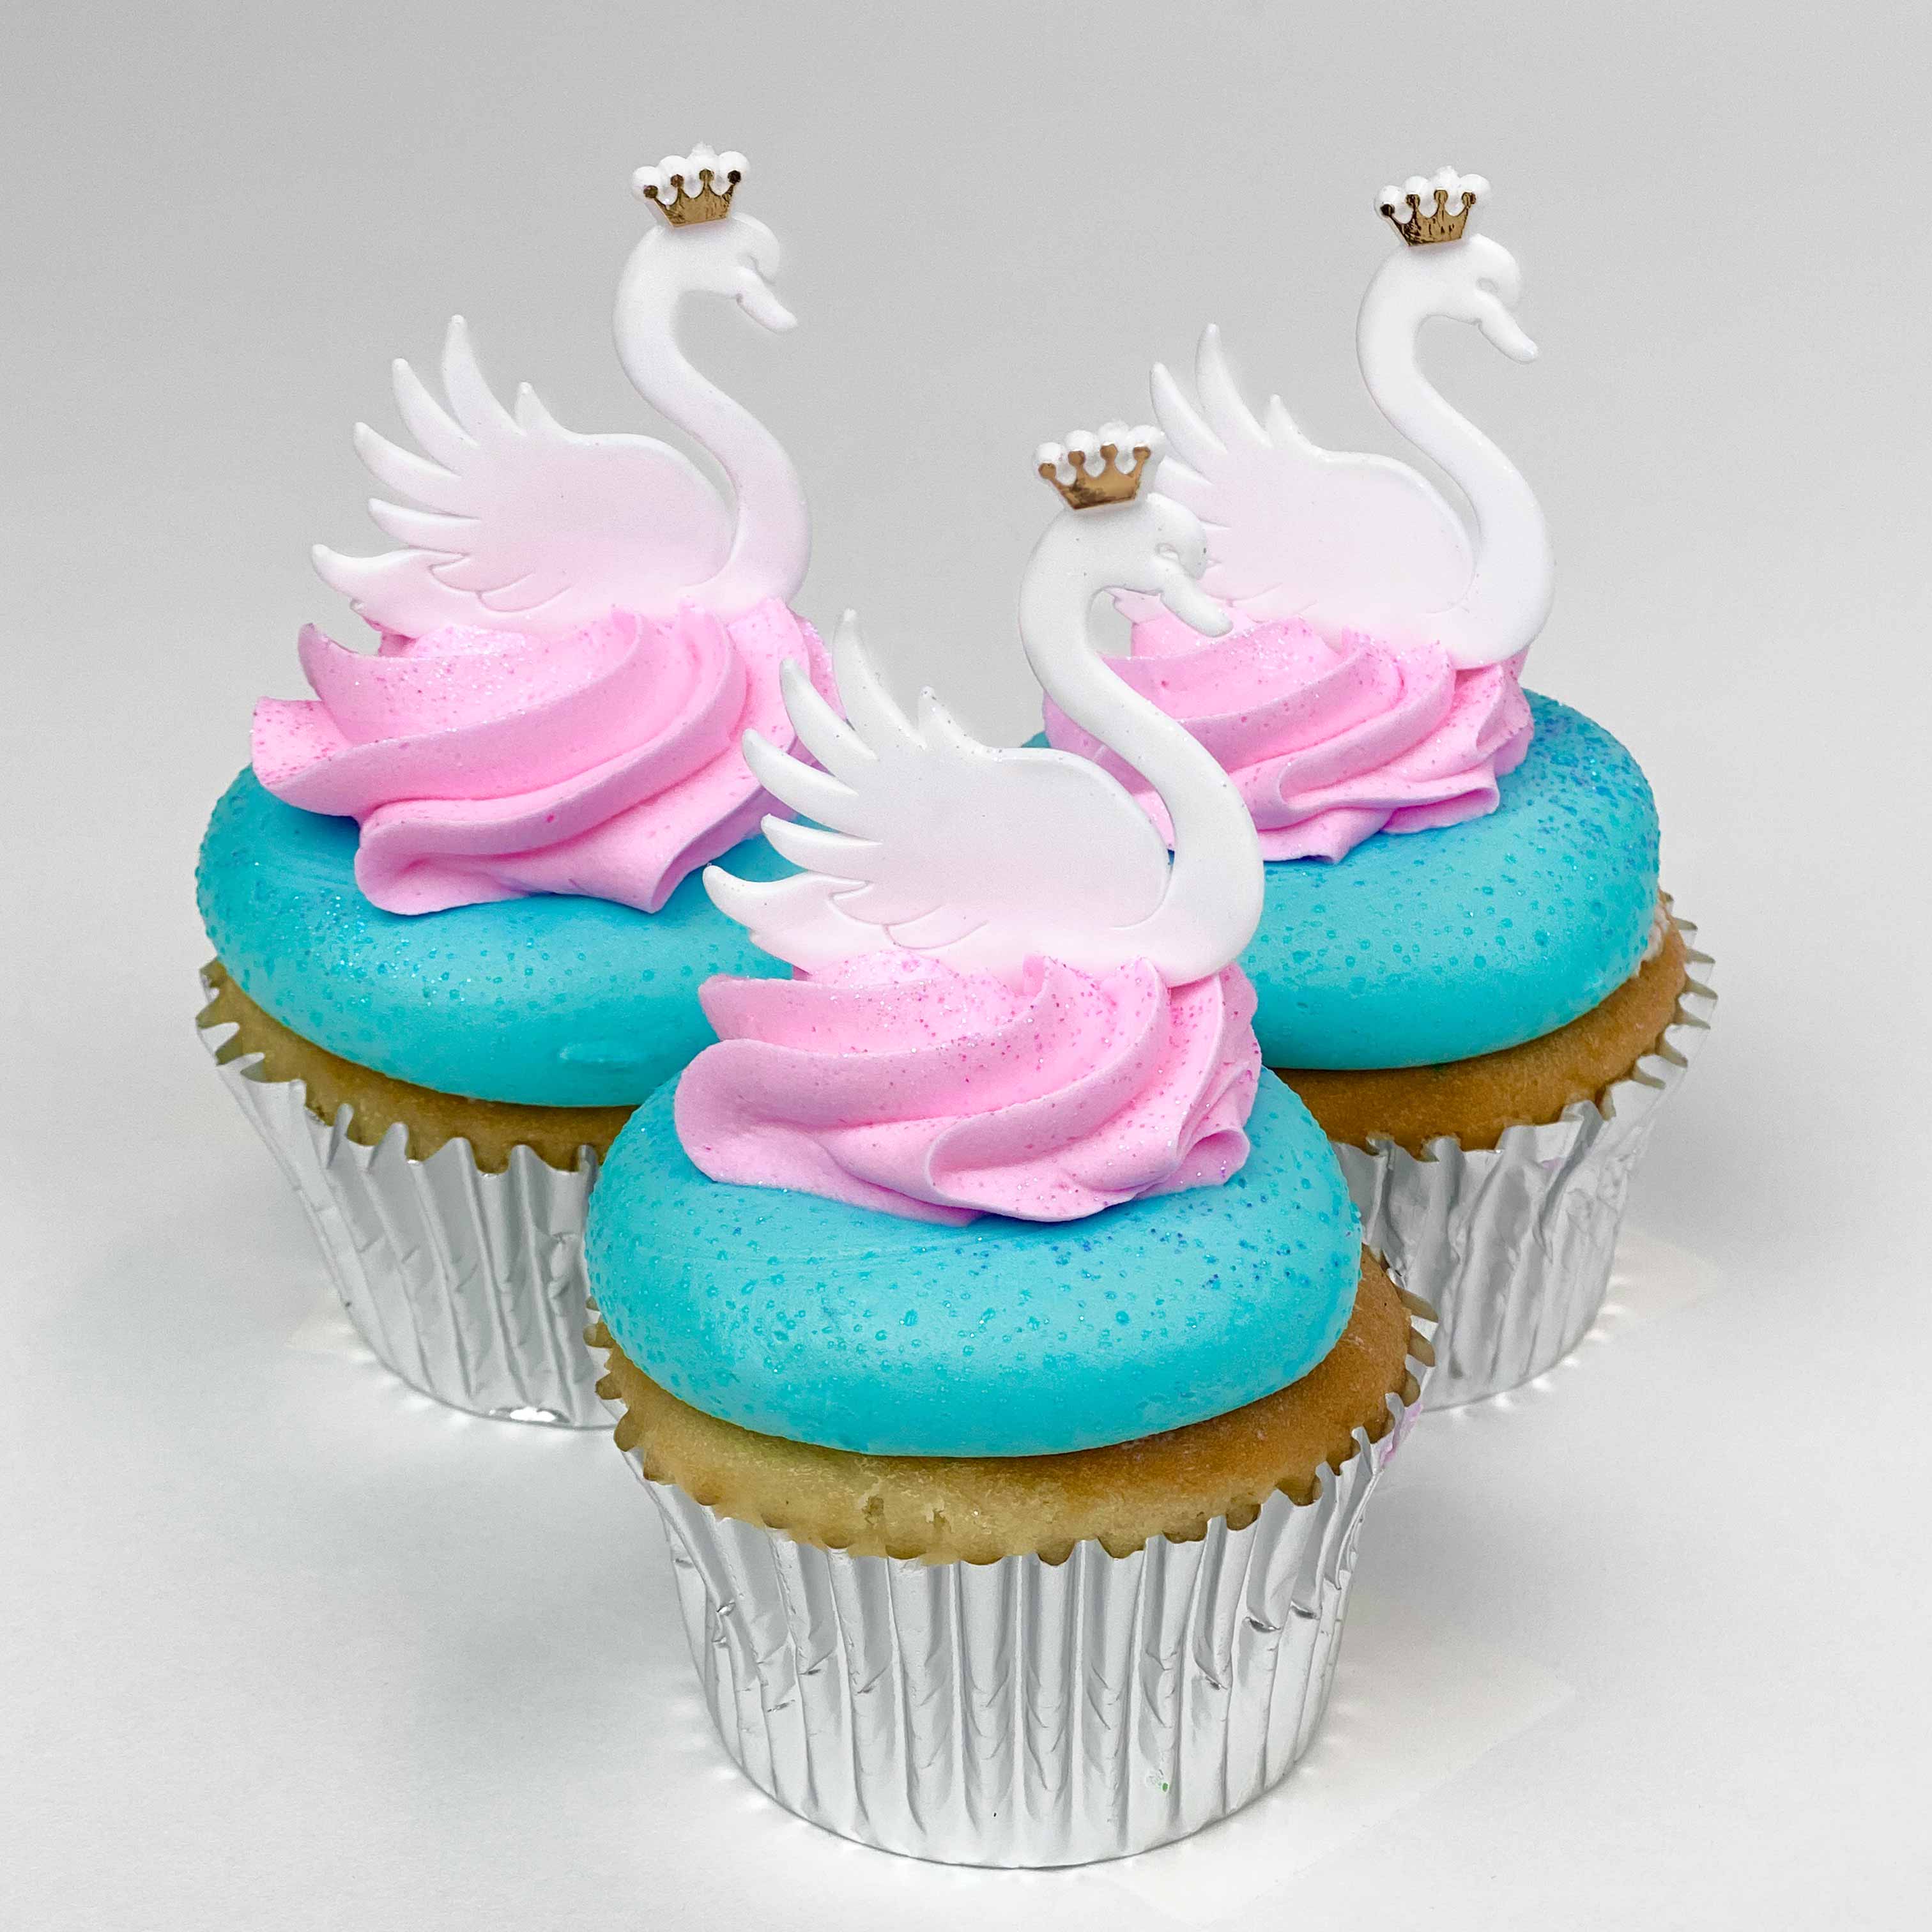 White Swan Cupcakes